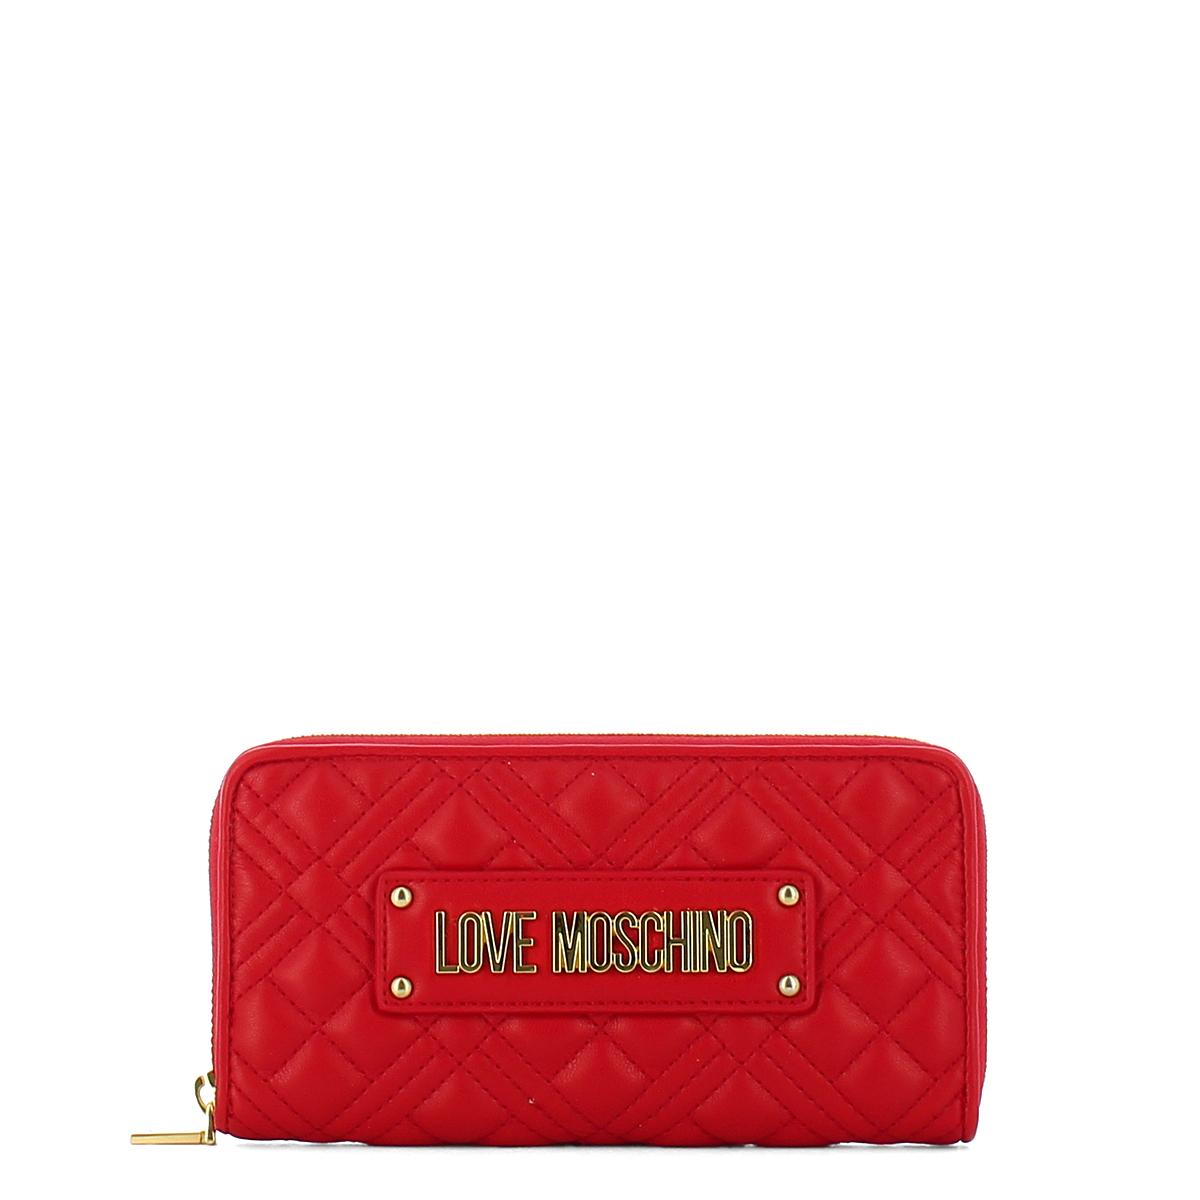 Love Moschino Women's Wallet